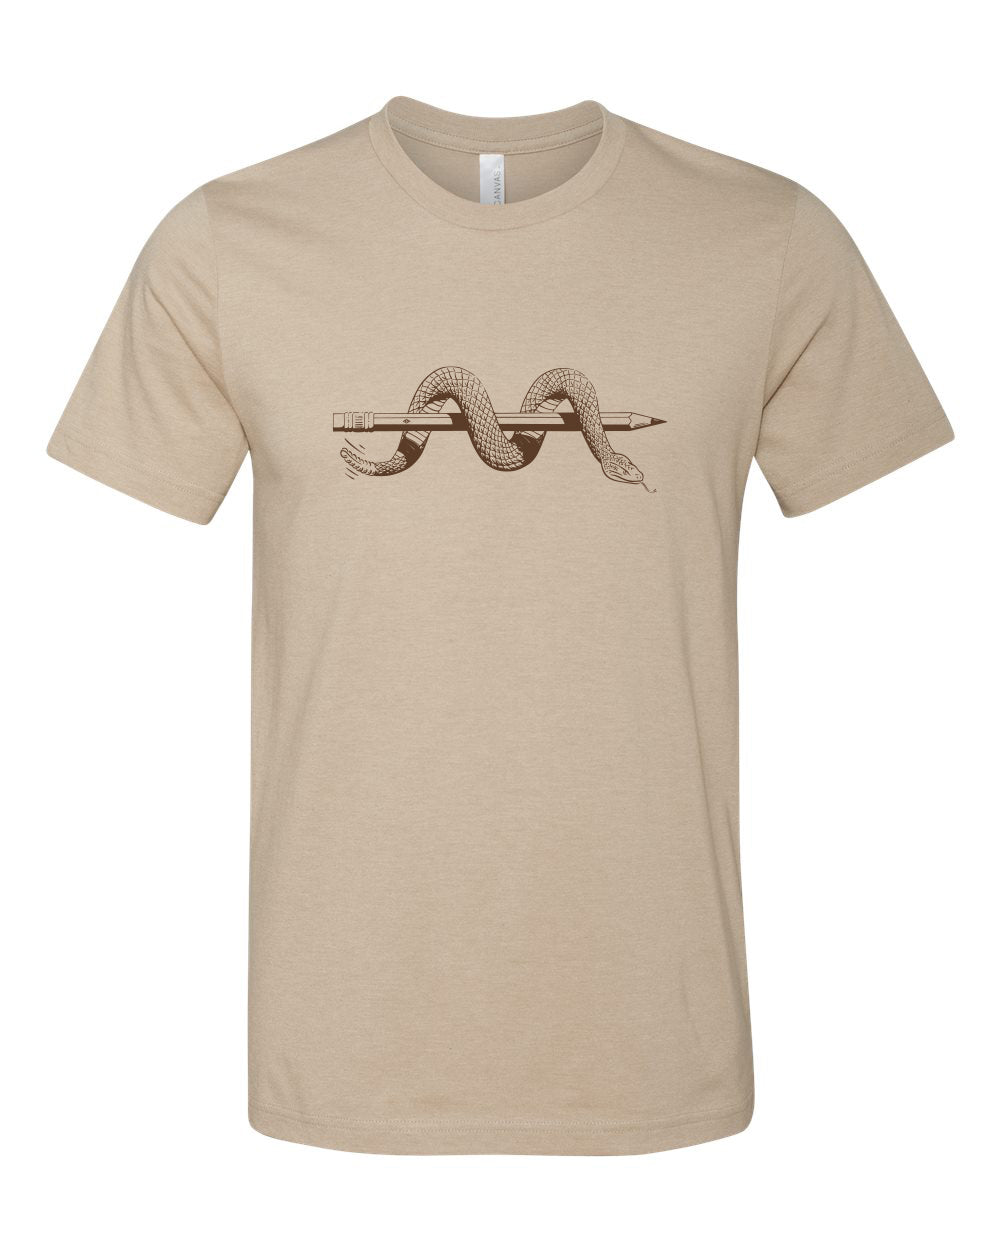 Musgrave Snake T-Shirt